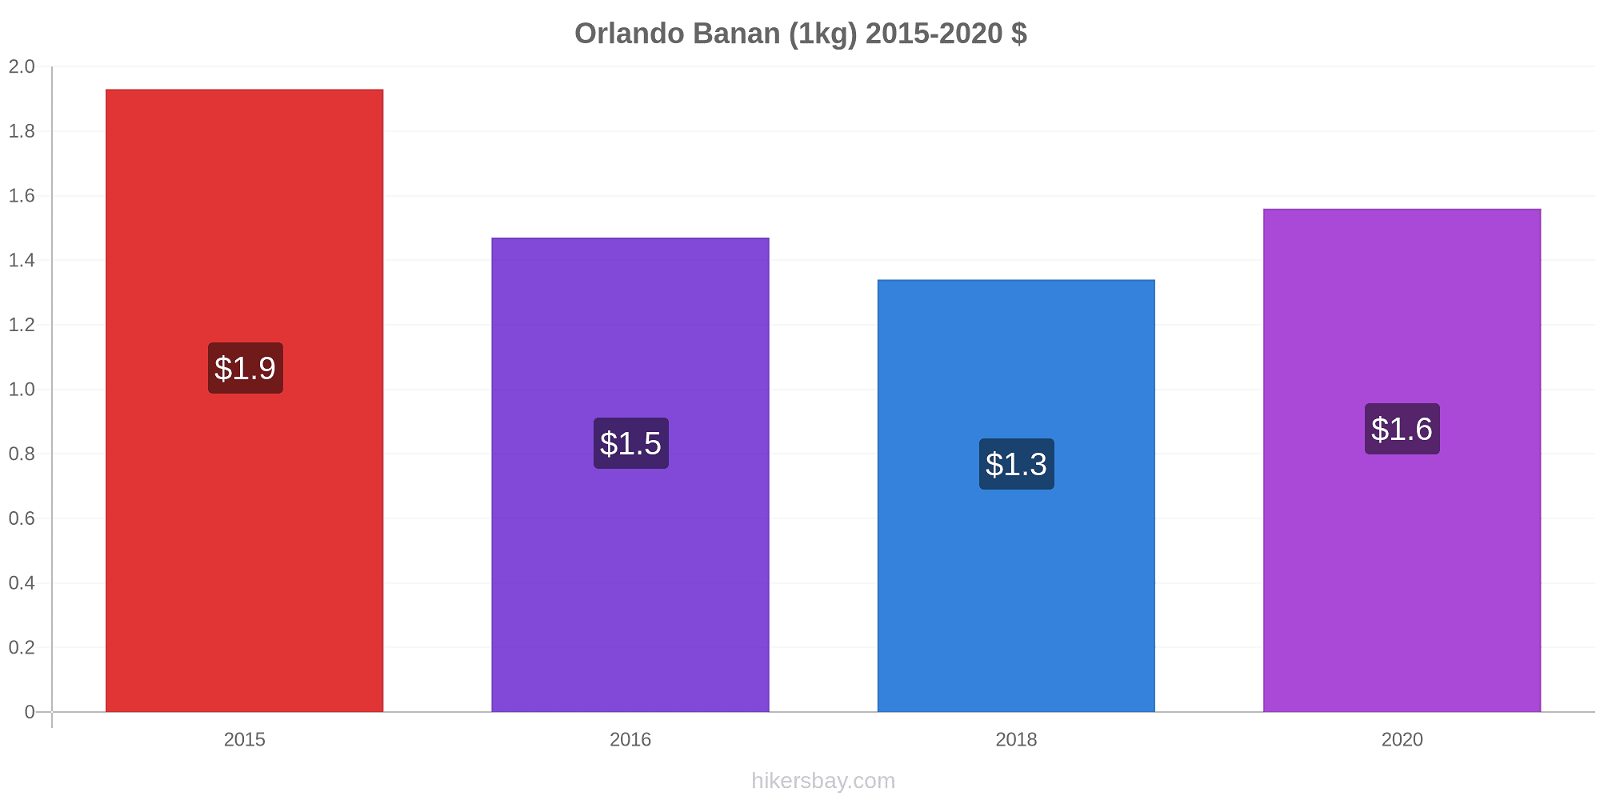 Orlando prisændringer Banan (1kg) hikersbay.com